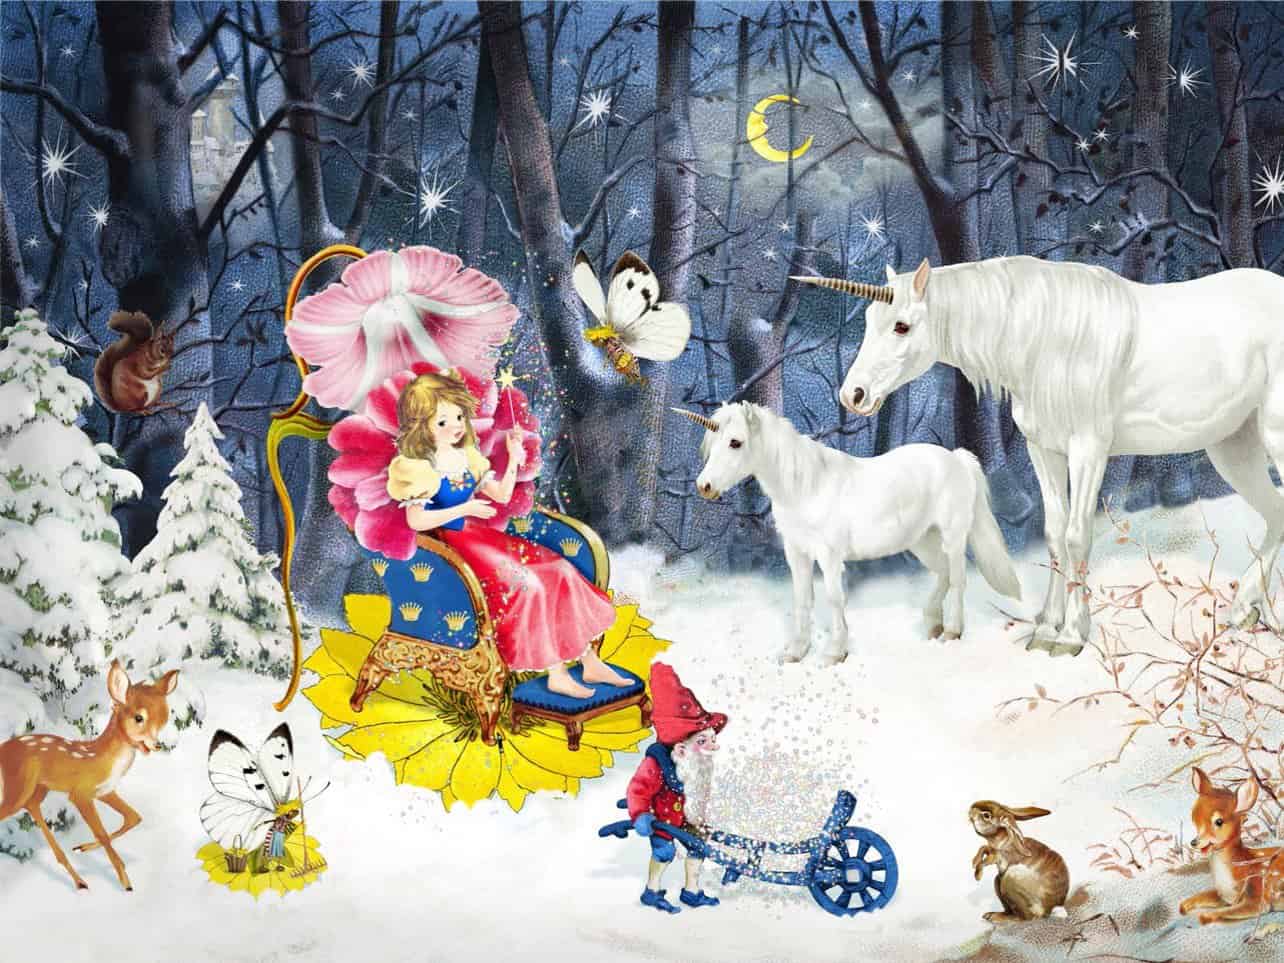 diamonds-wizard-diamond-painting-kits-Events-Christmas-The Enchanted Forest-original.jpeg